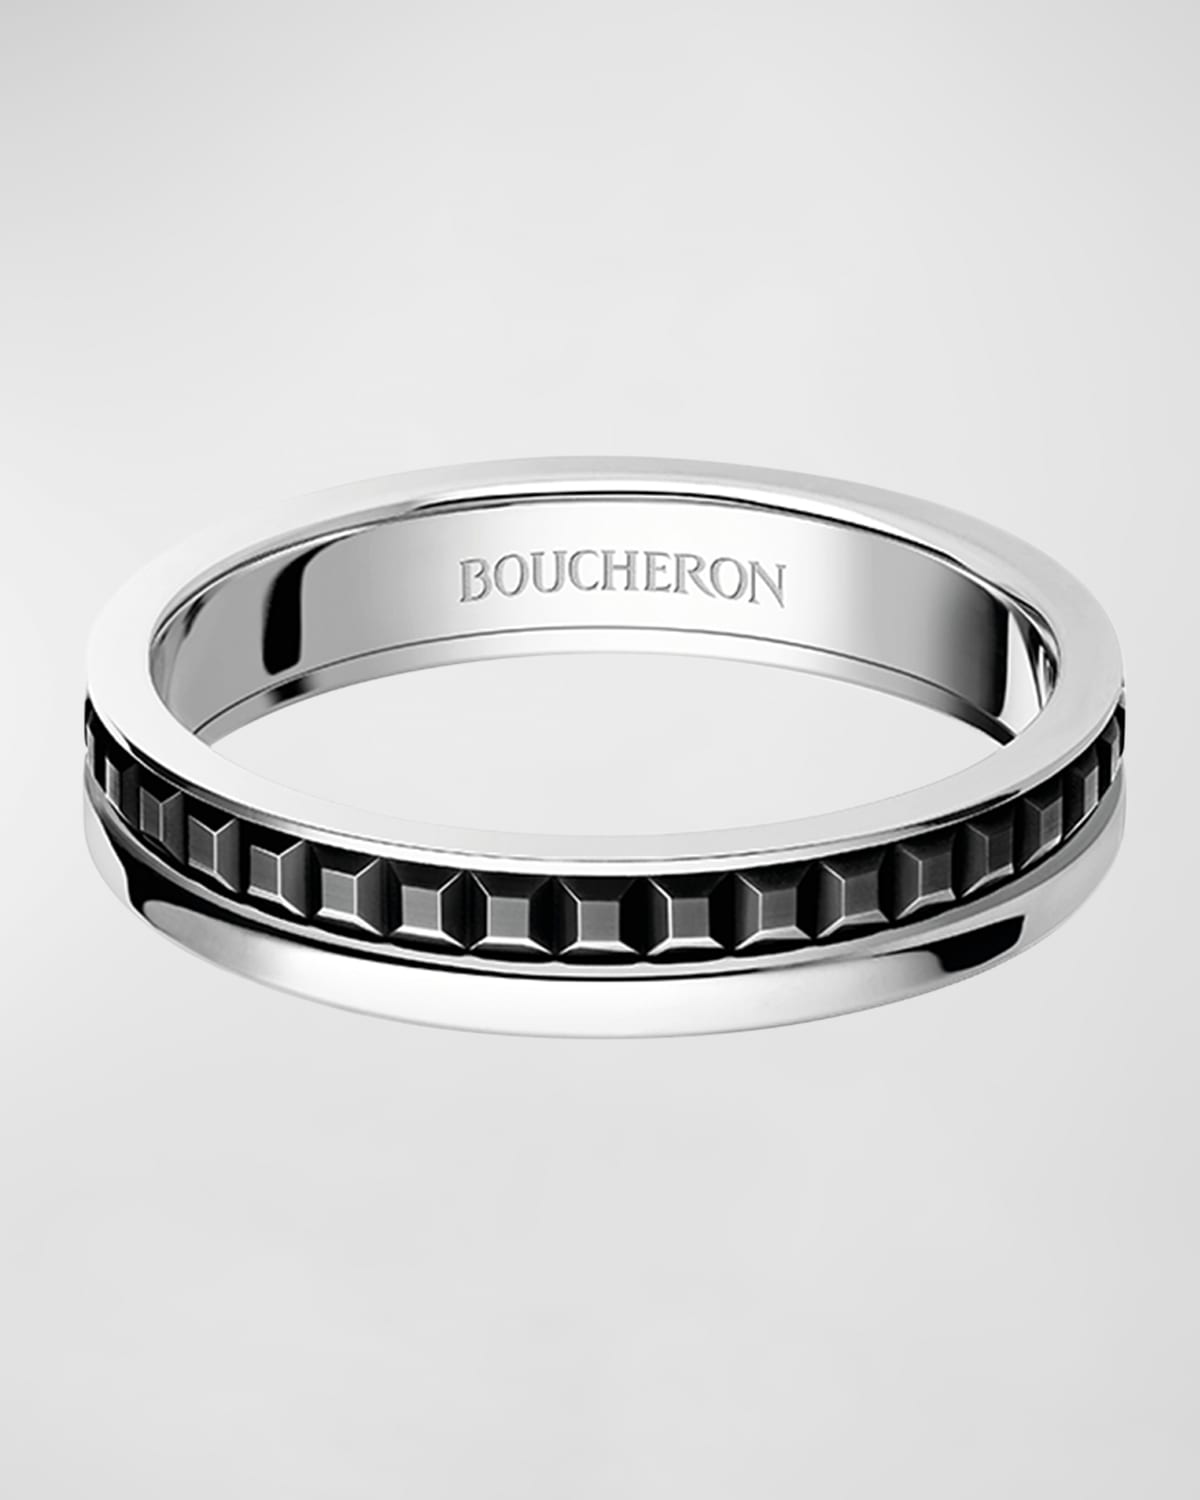 Boucheron Black and White Gold Quatre Follies Band Ring, Size 53